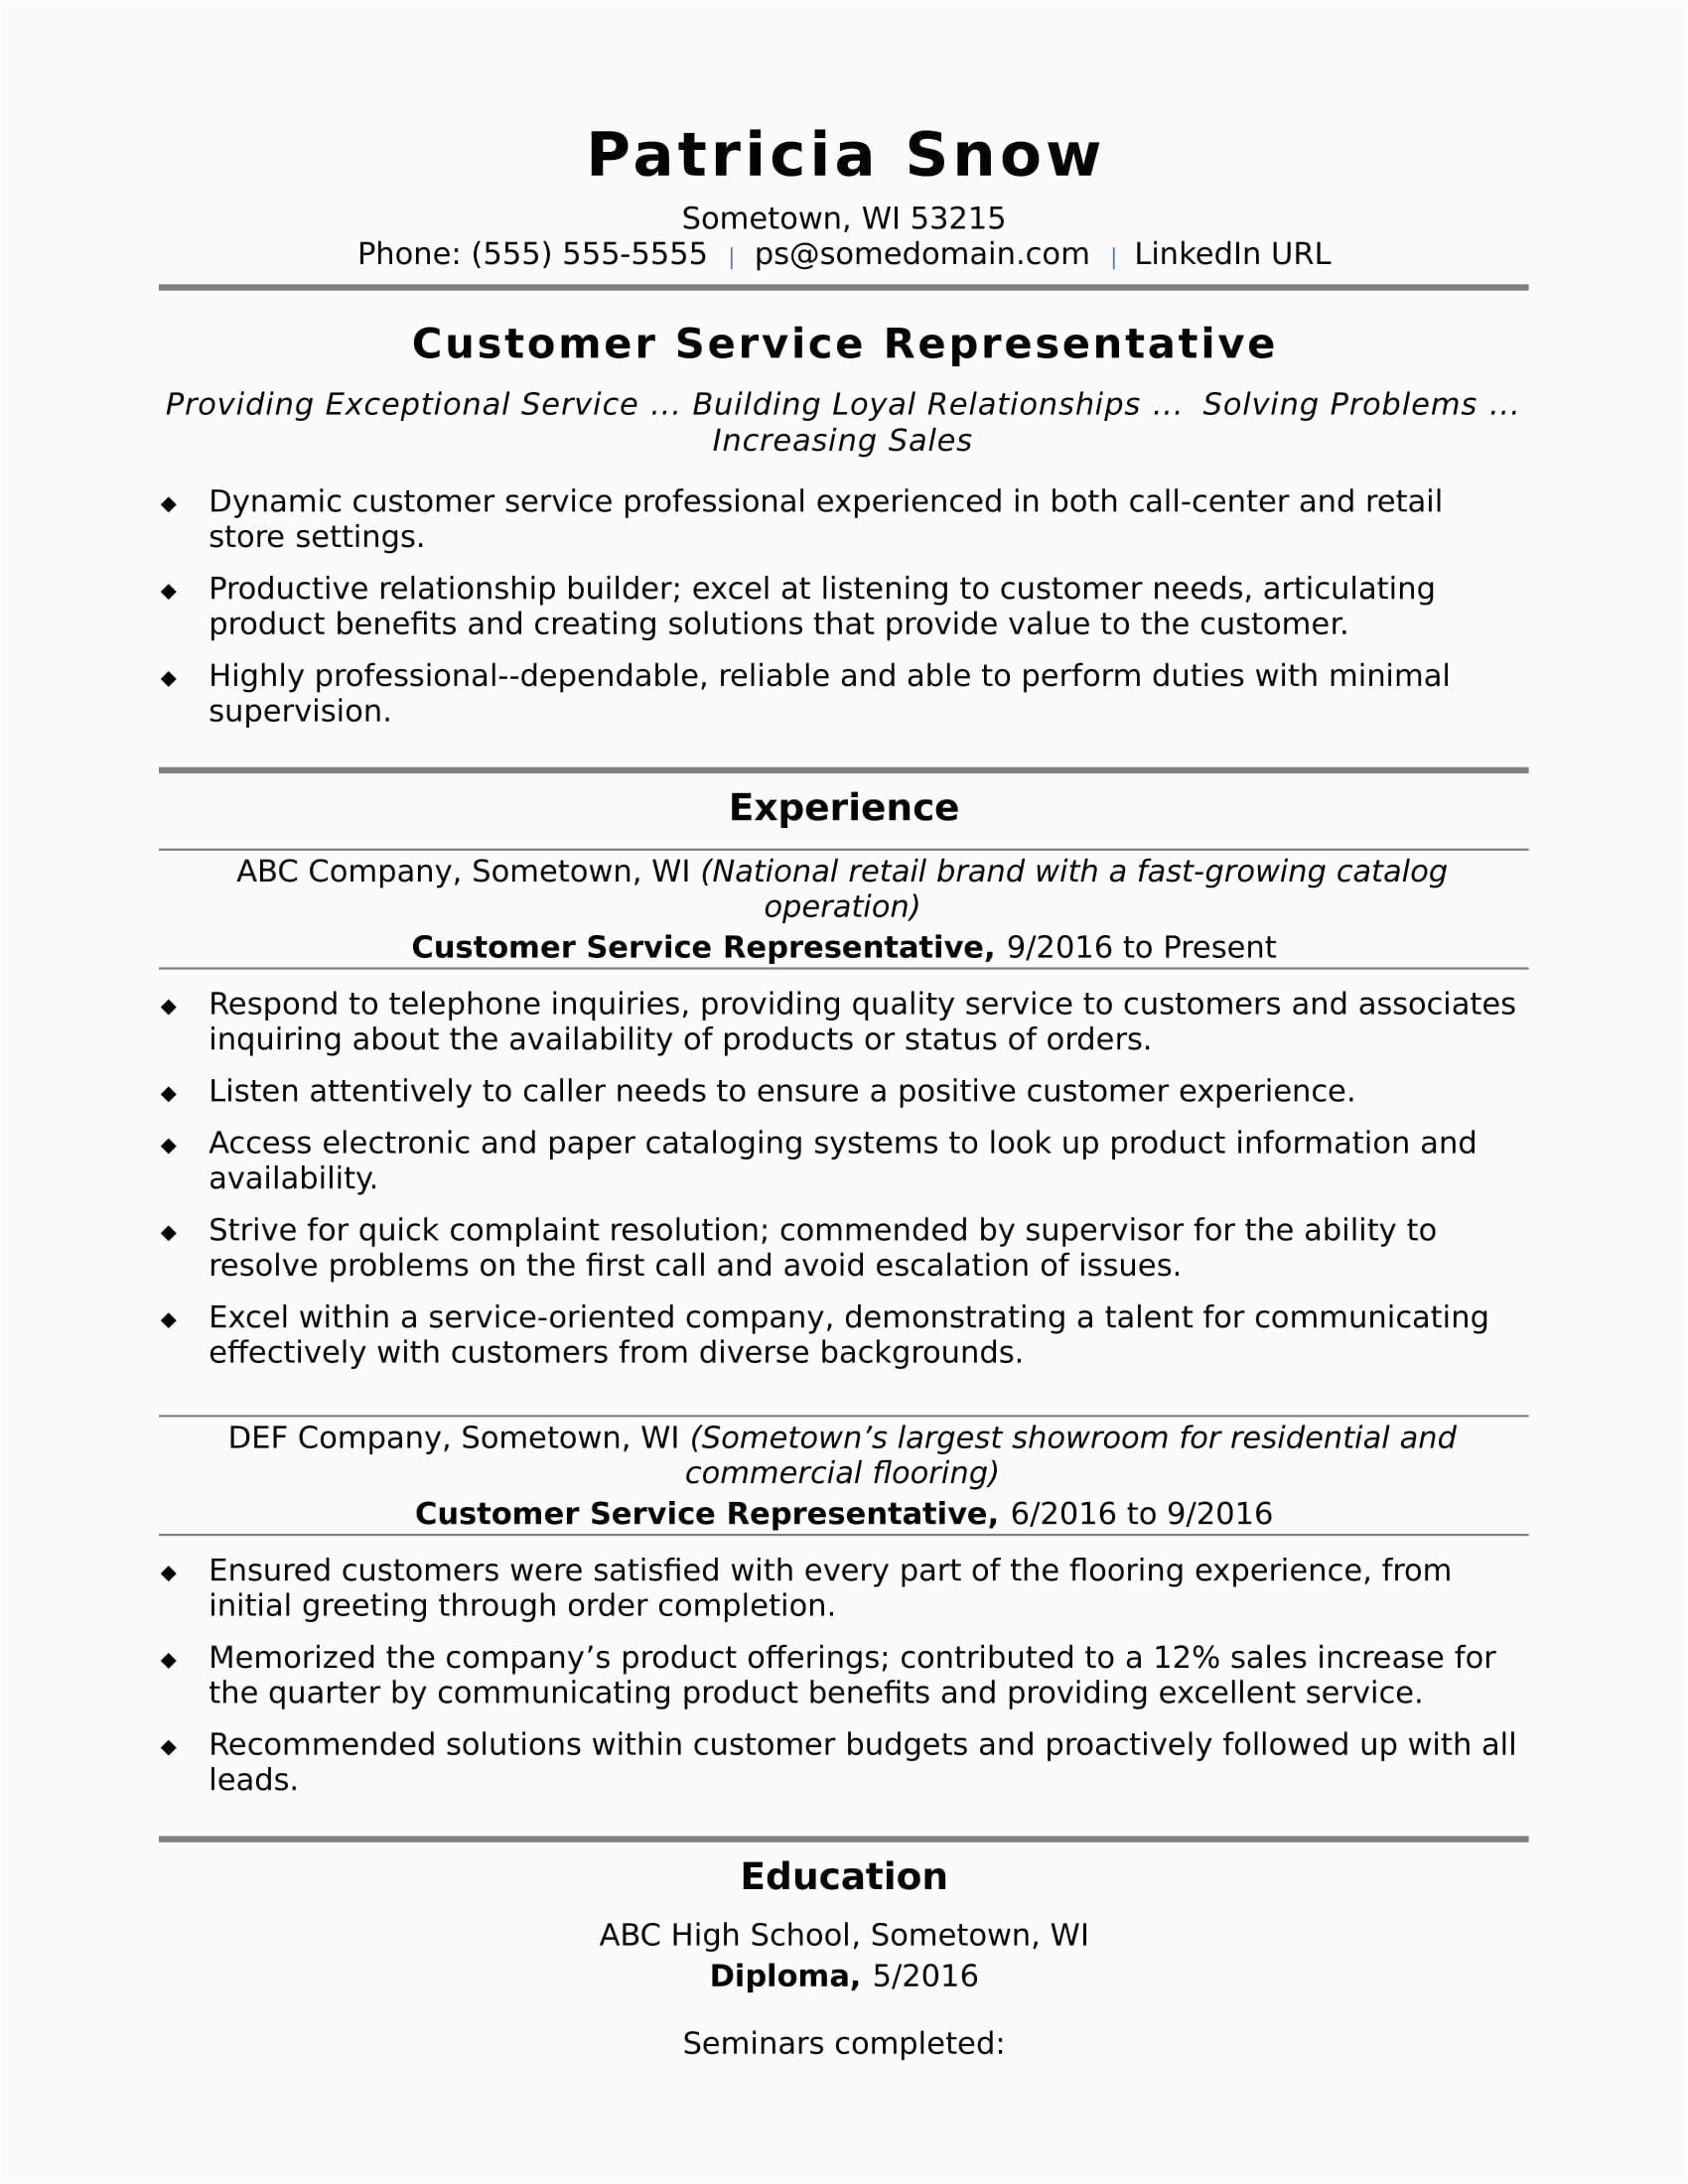 Sample Resume Customer Service Representative Objective Customer Service Representative Resume Sample